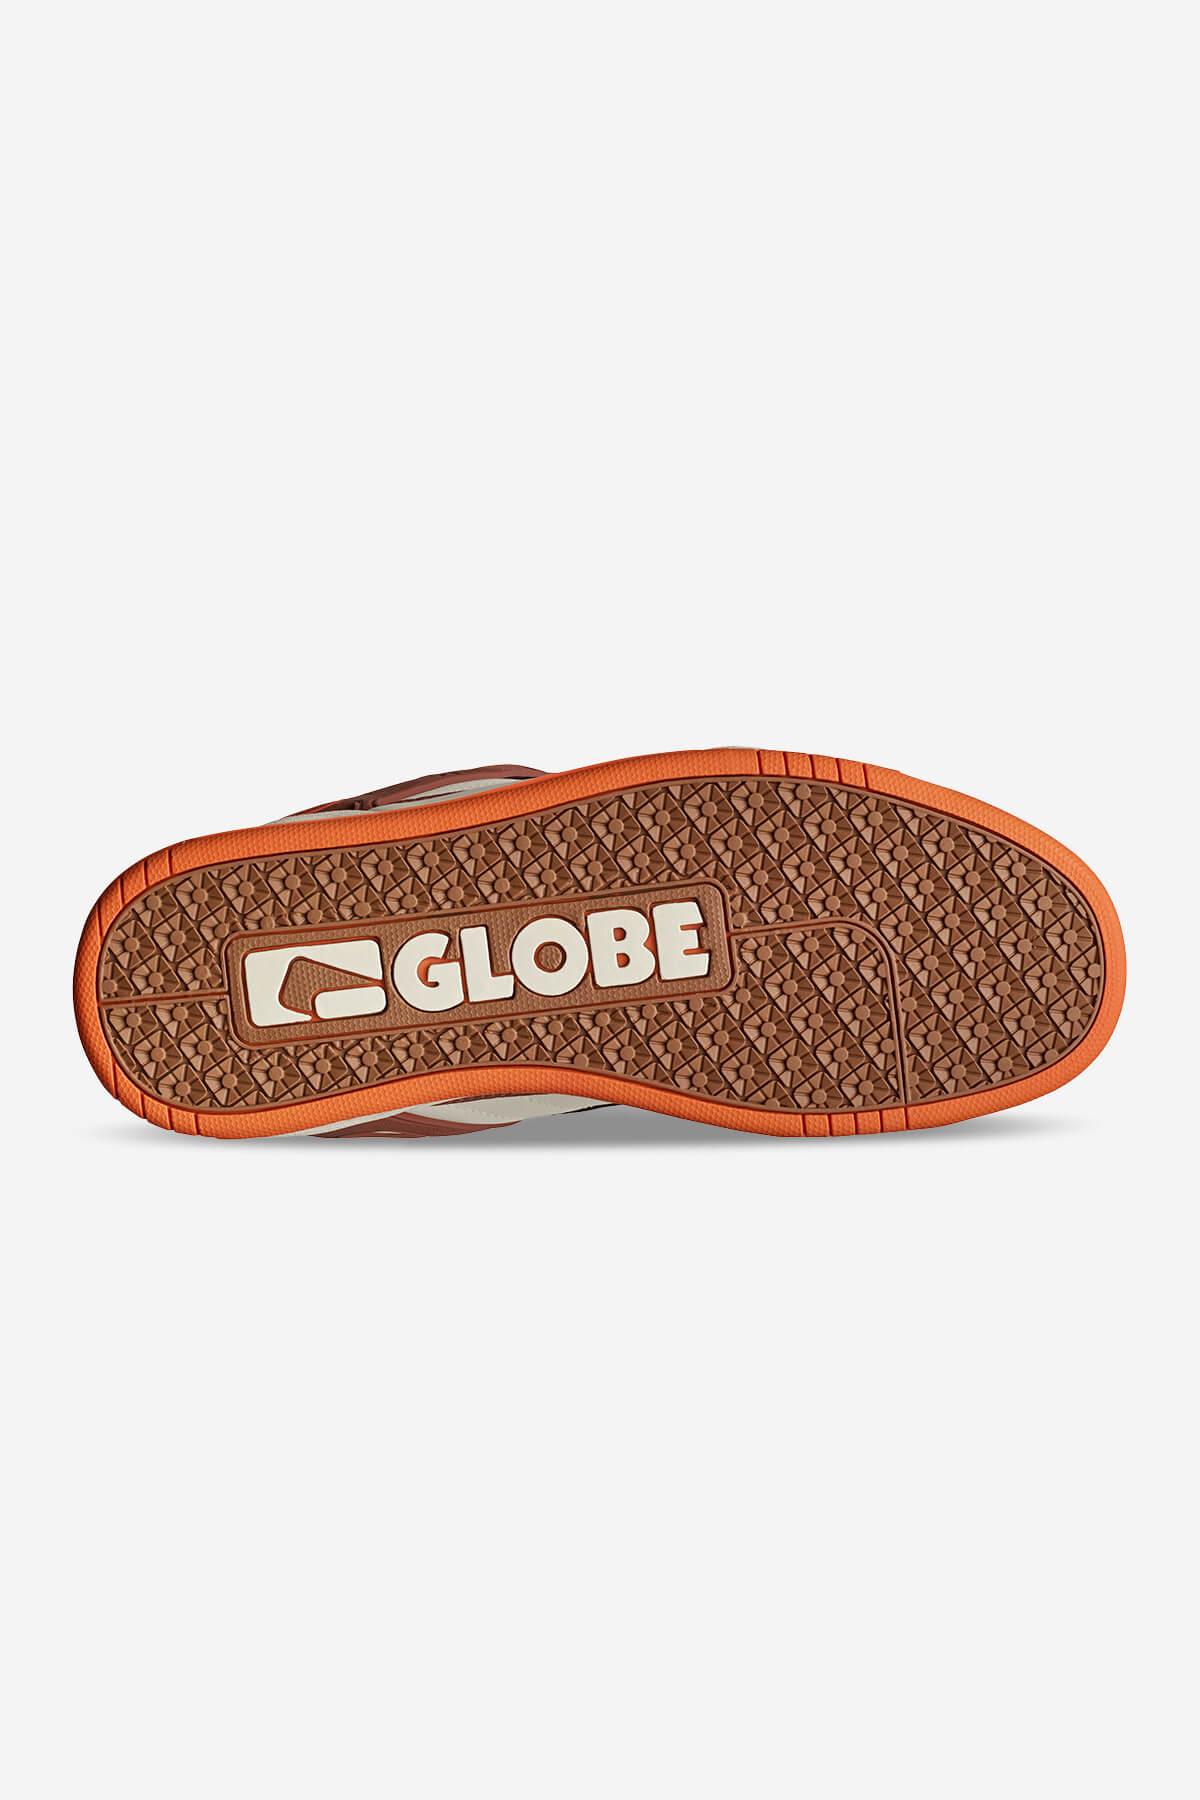 Globe - Tilt - Antique/Mocha - skateboard Chaussures